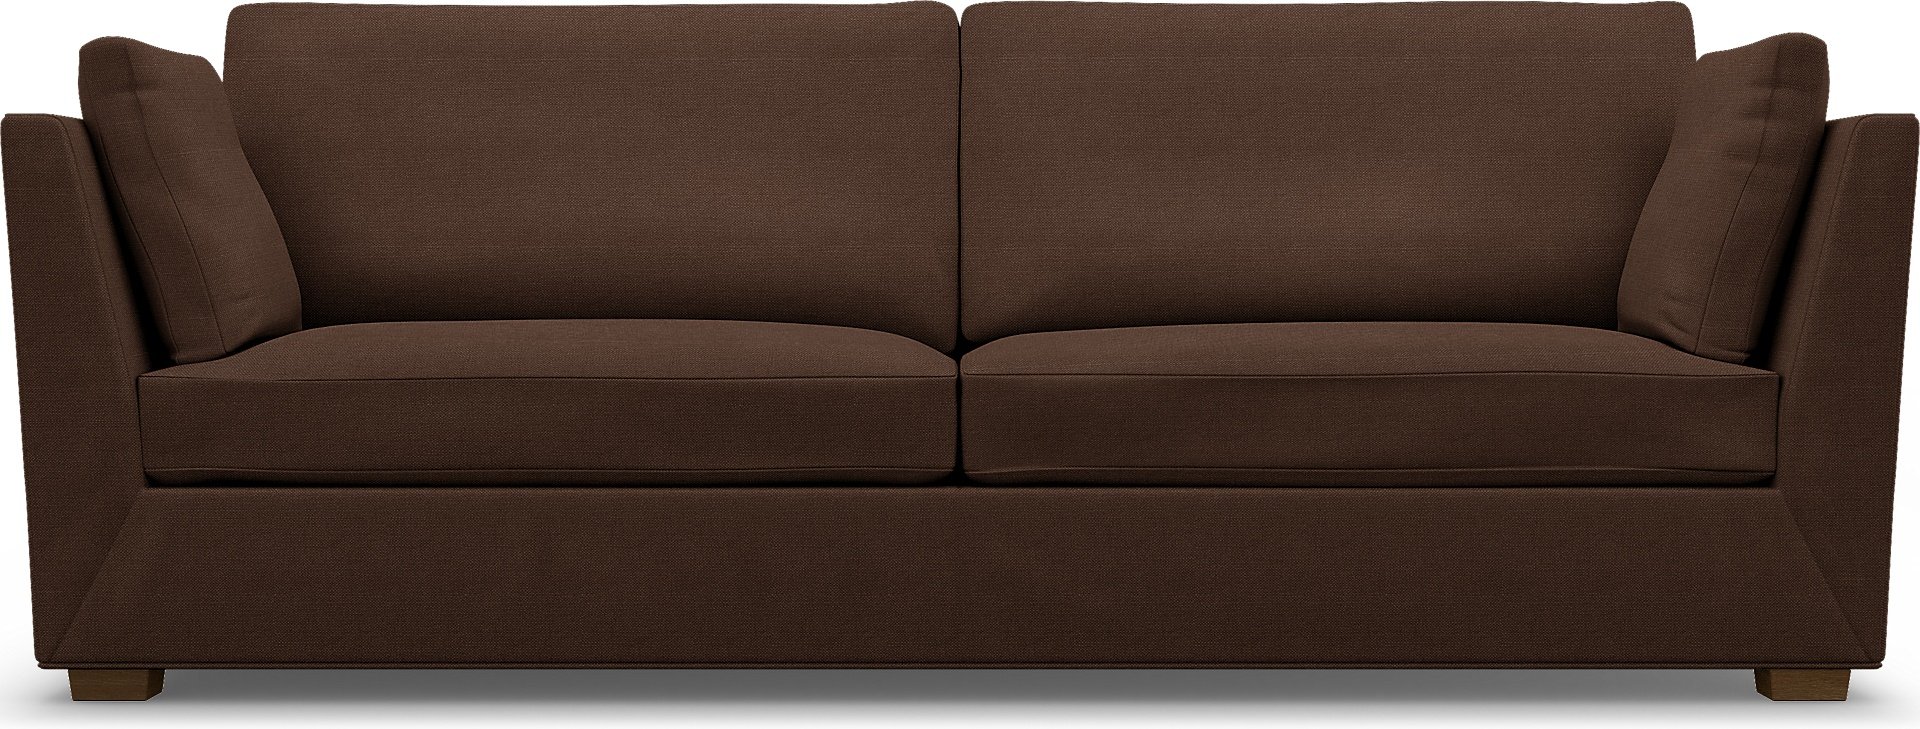 IKEA - Stockholm 3.5 Seater Sofa Cover, Chocolate, Linen - Bemz